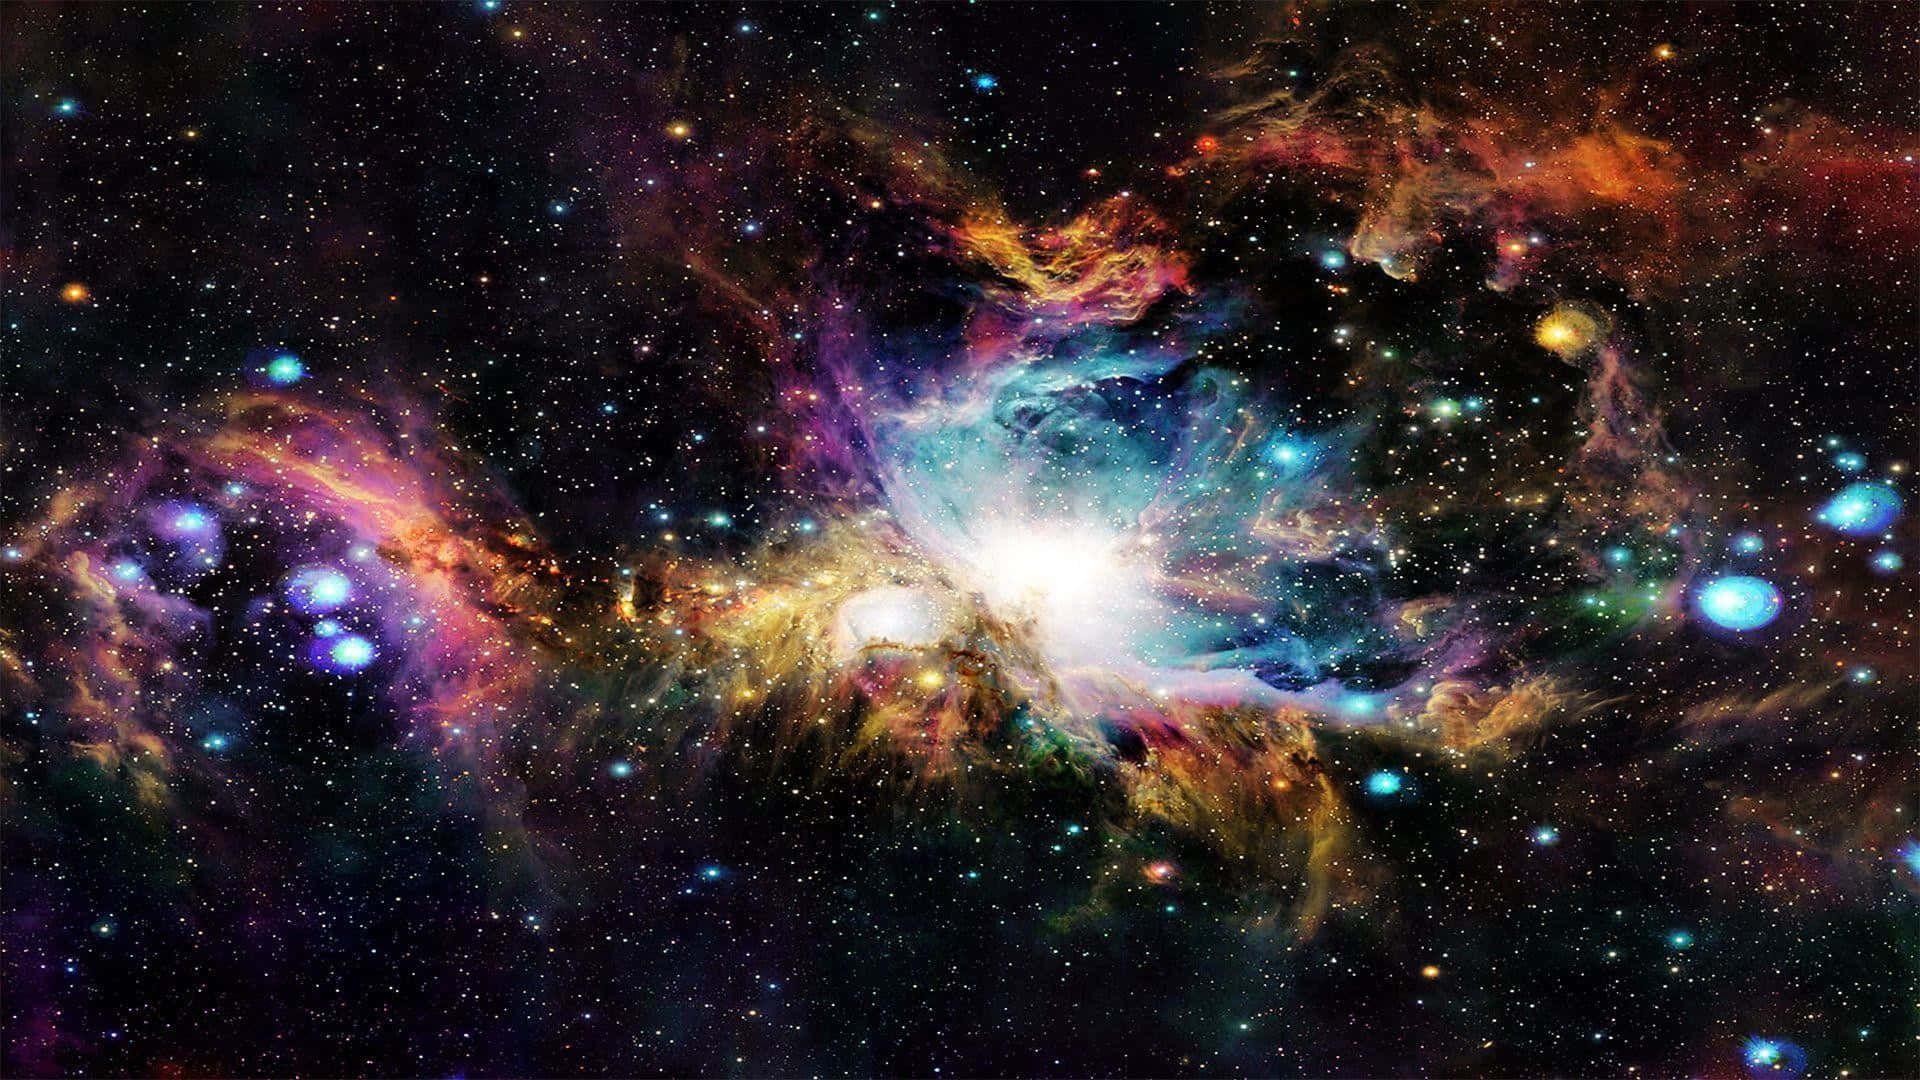 Descubrela Belleza Del Espacio Exterior Con Este Impresionante Fondo De Nebulosa.